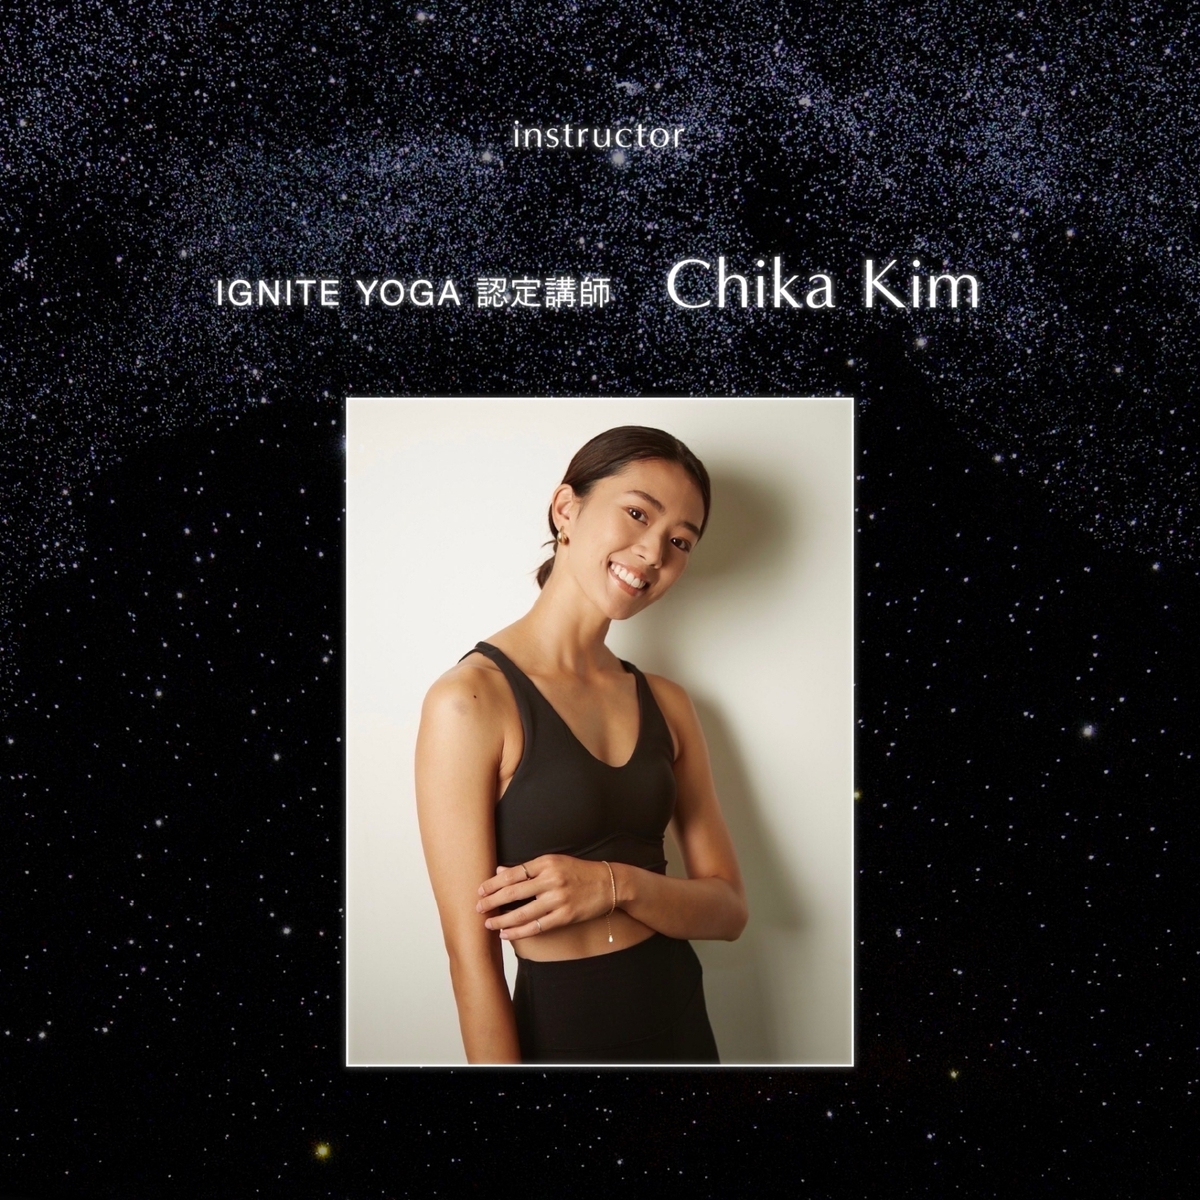 Chika Kim